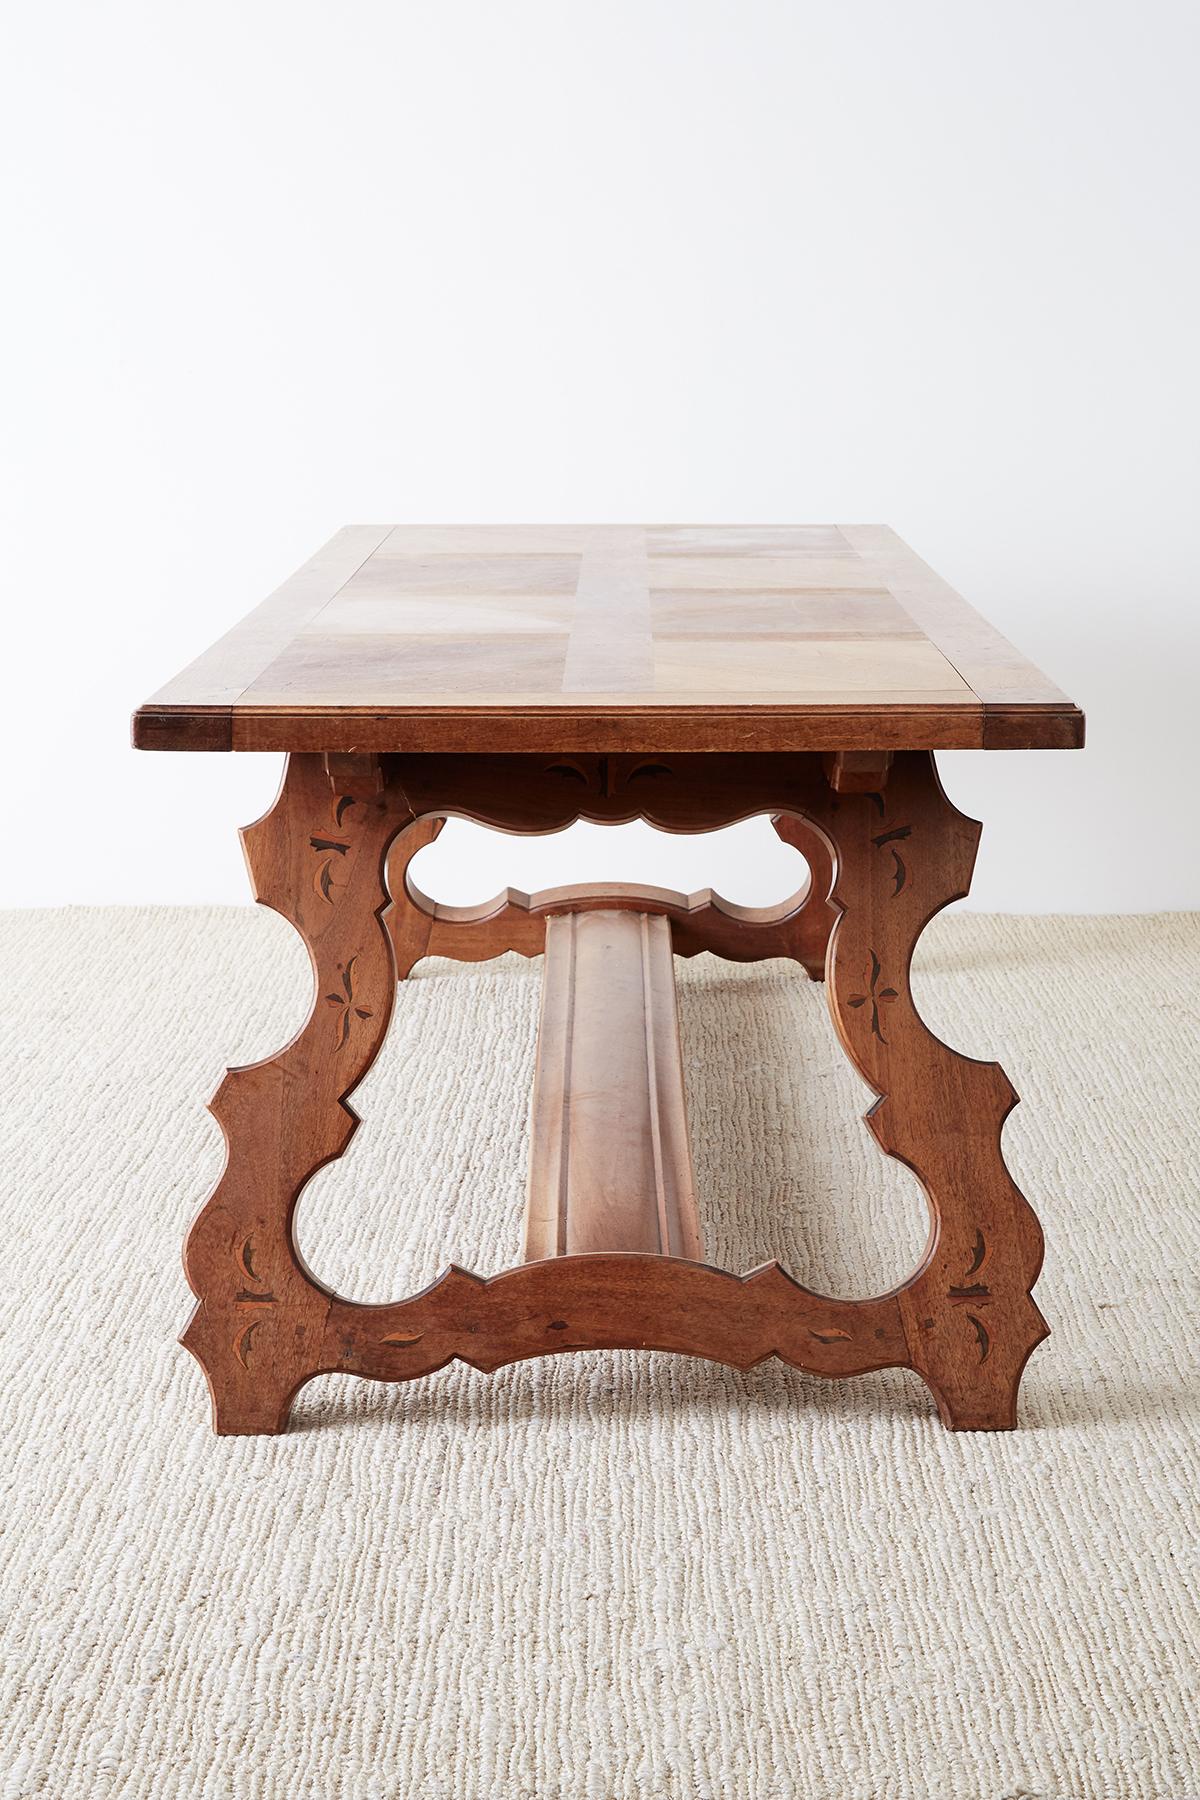 18th Century and Earlier 18th Century Italian Baroque Inlay Walnut Trestle Table